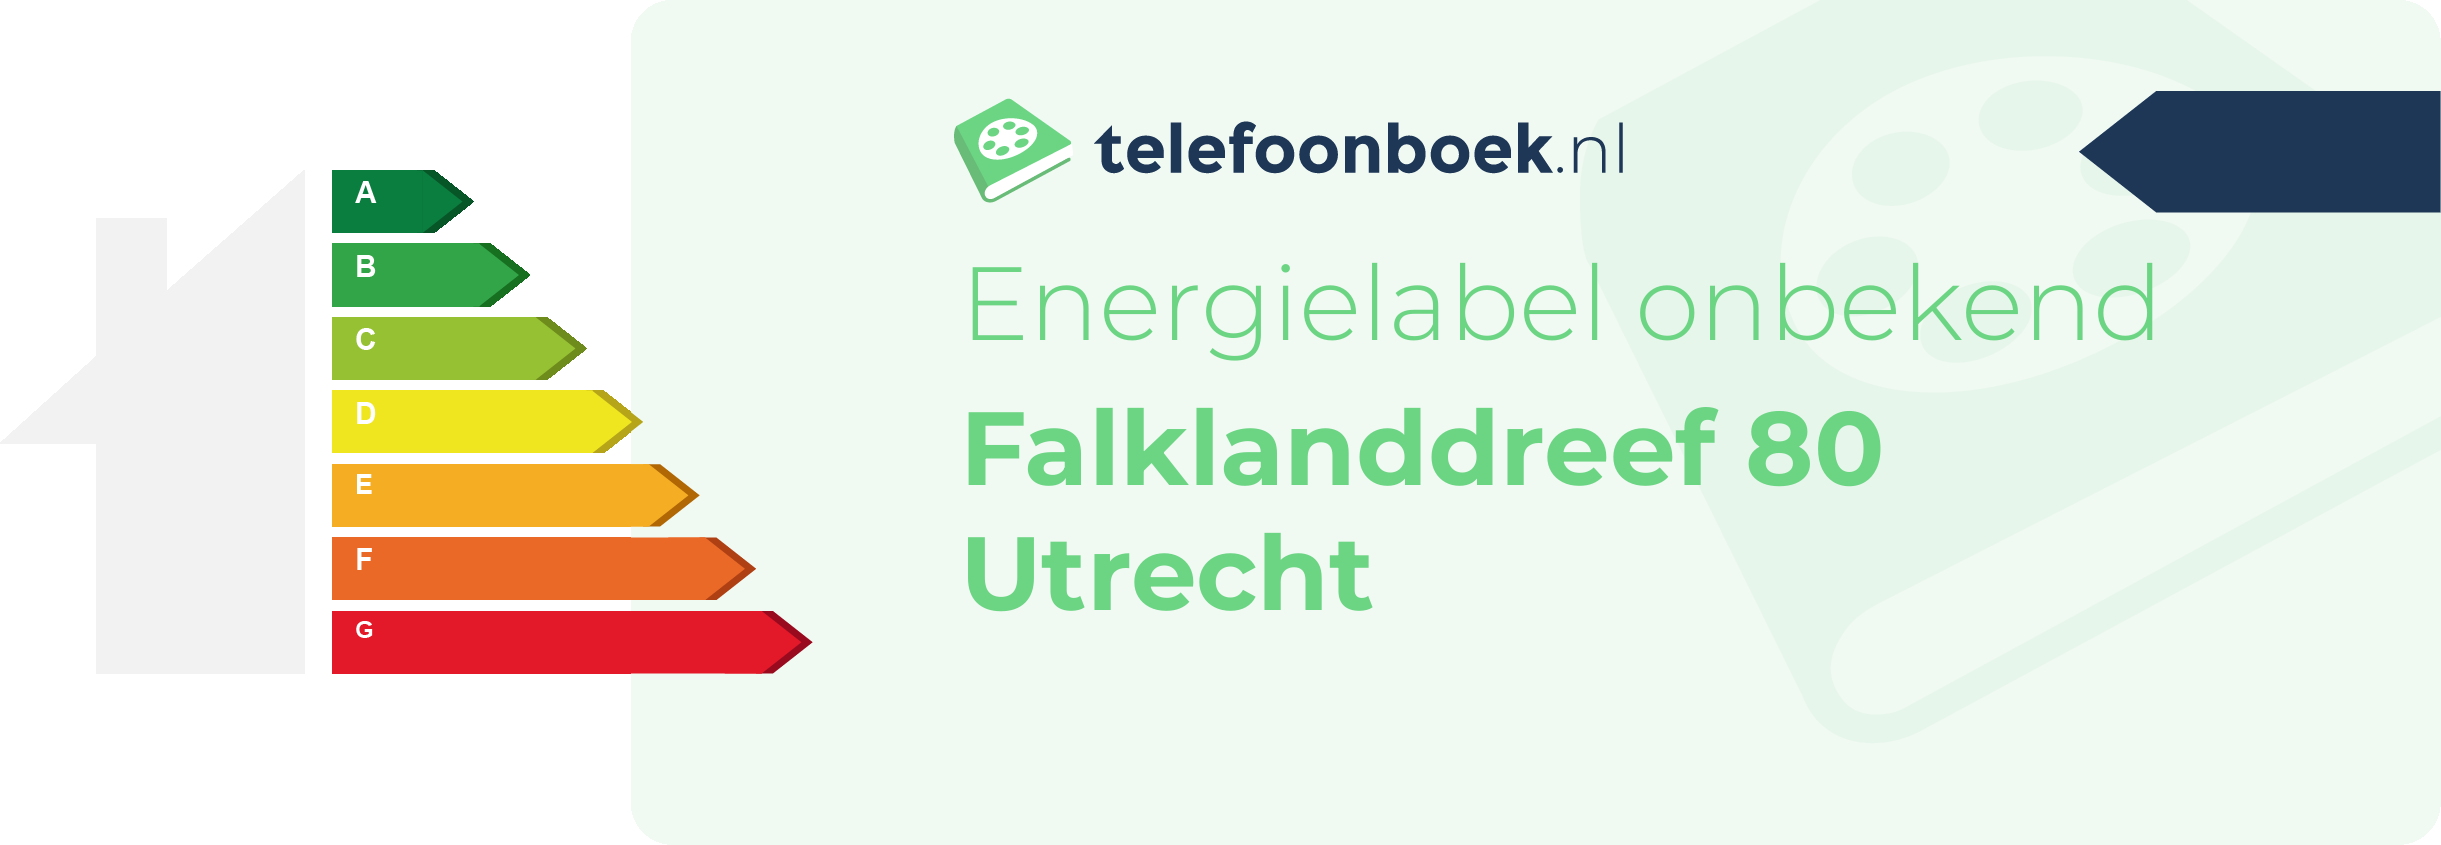 Energielabel Falklanddreef 80 Utrecht